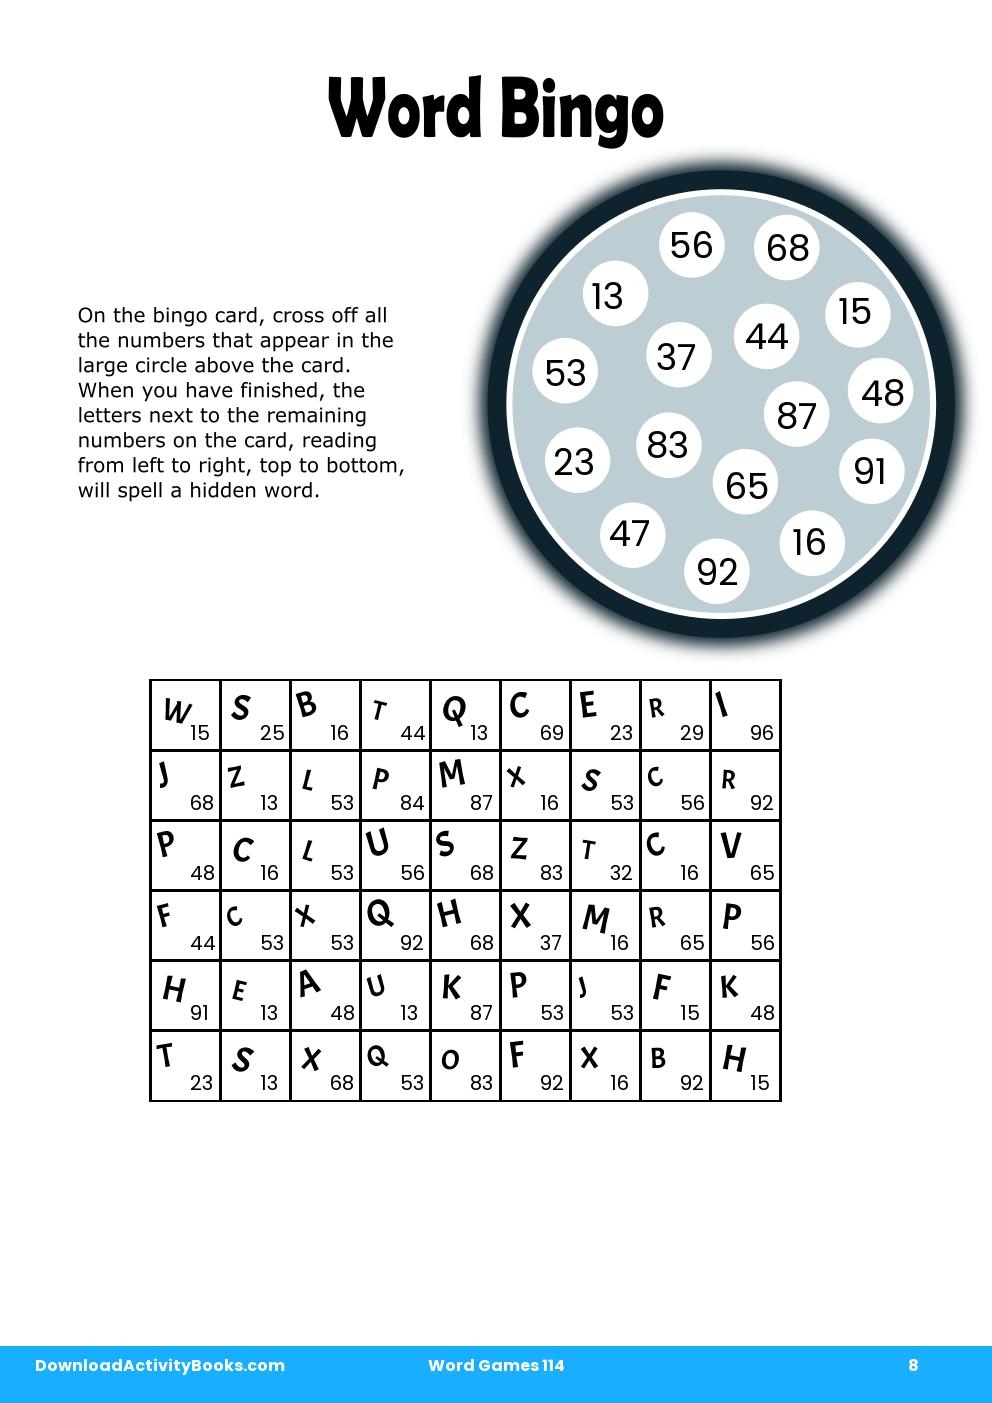 Word Bingo in Word Games 114